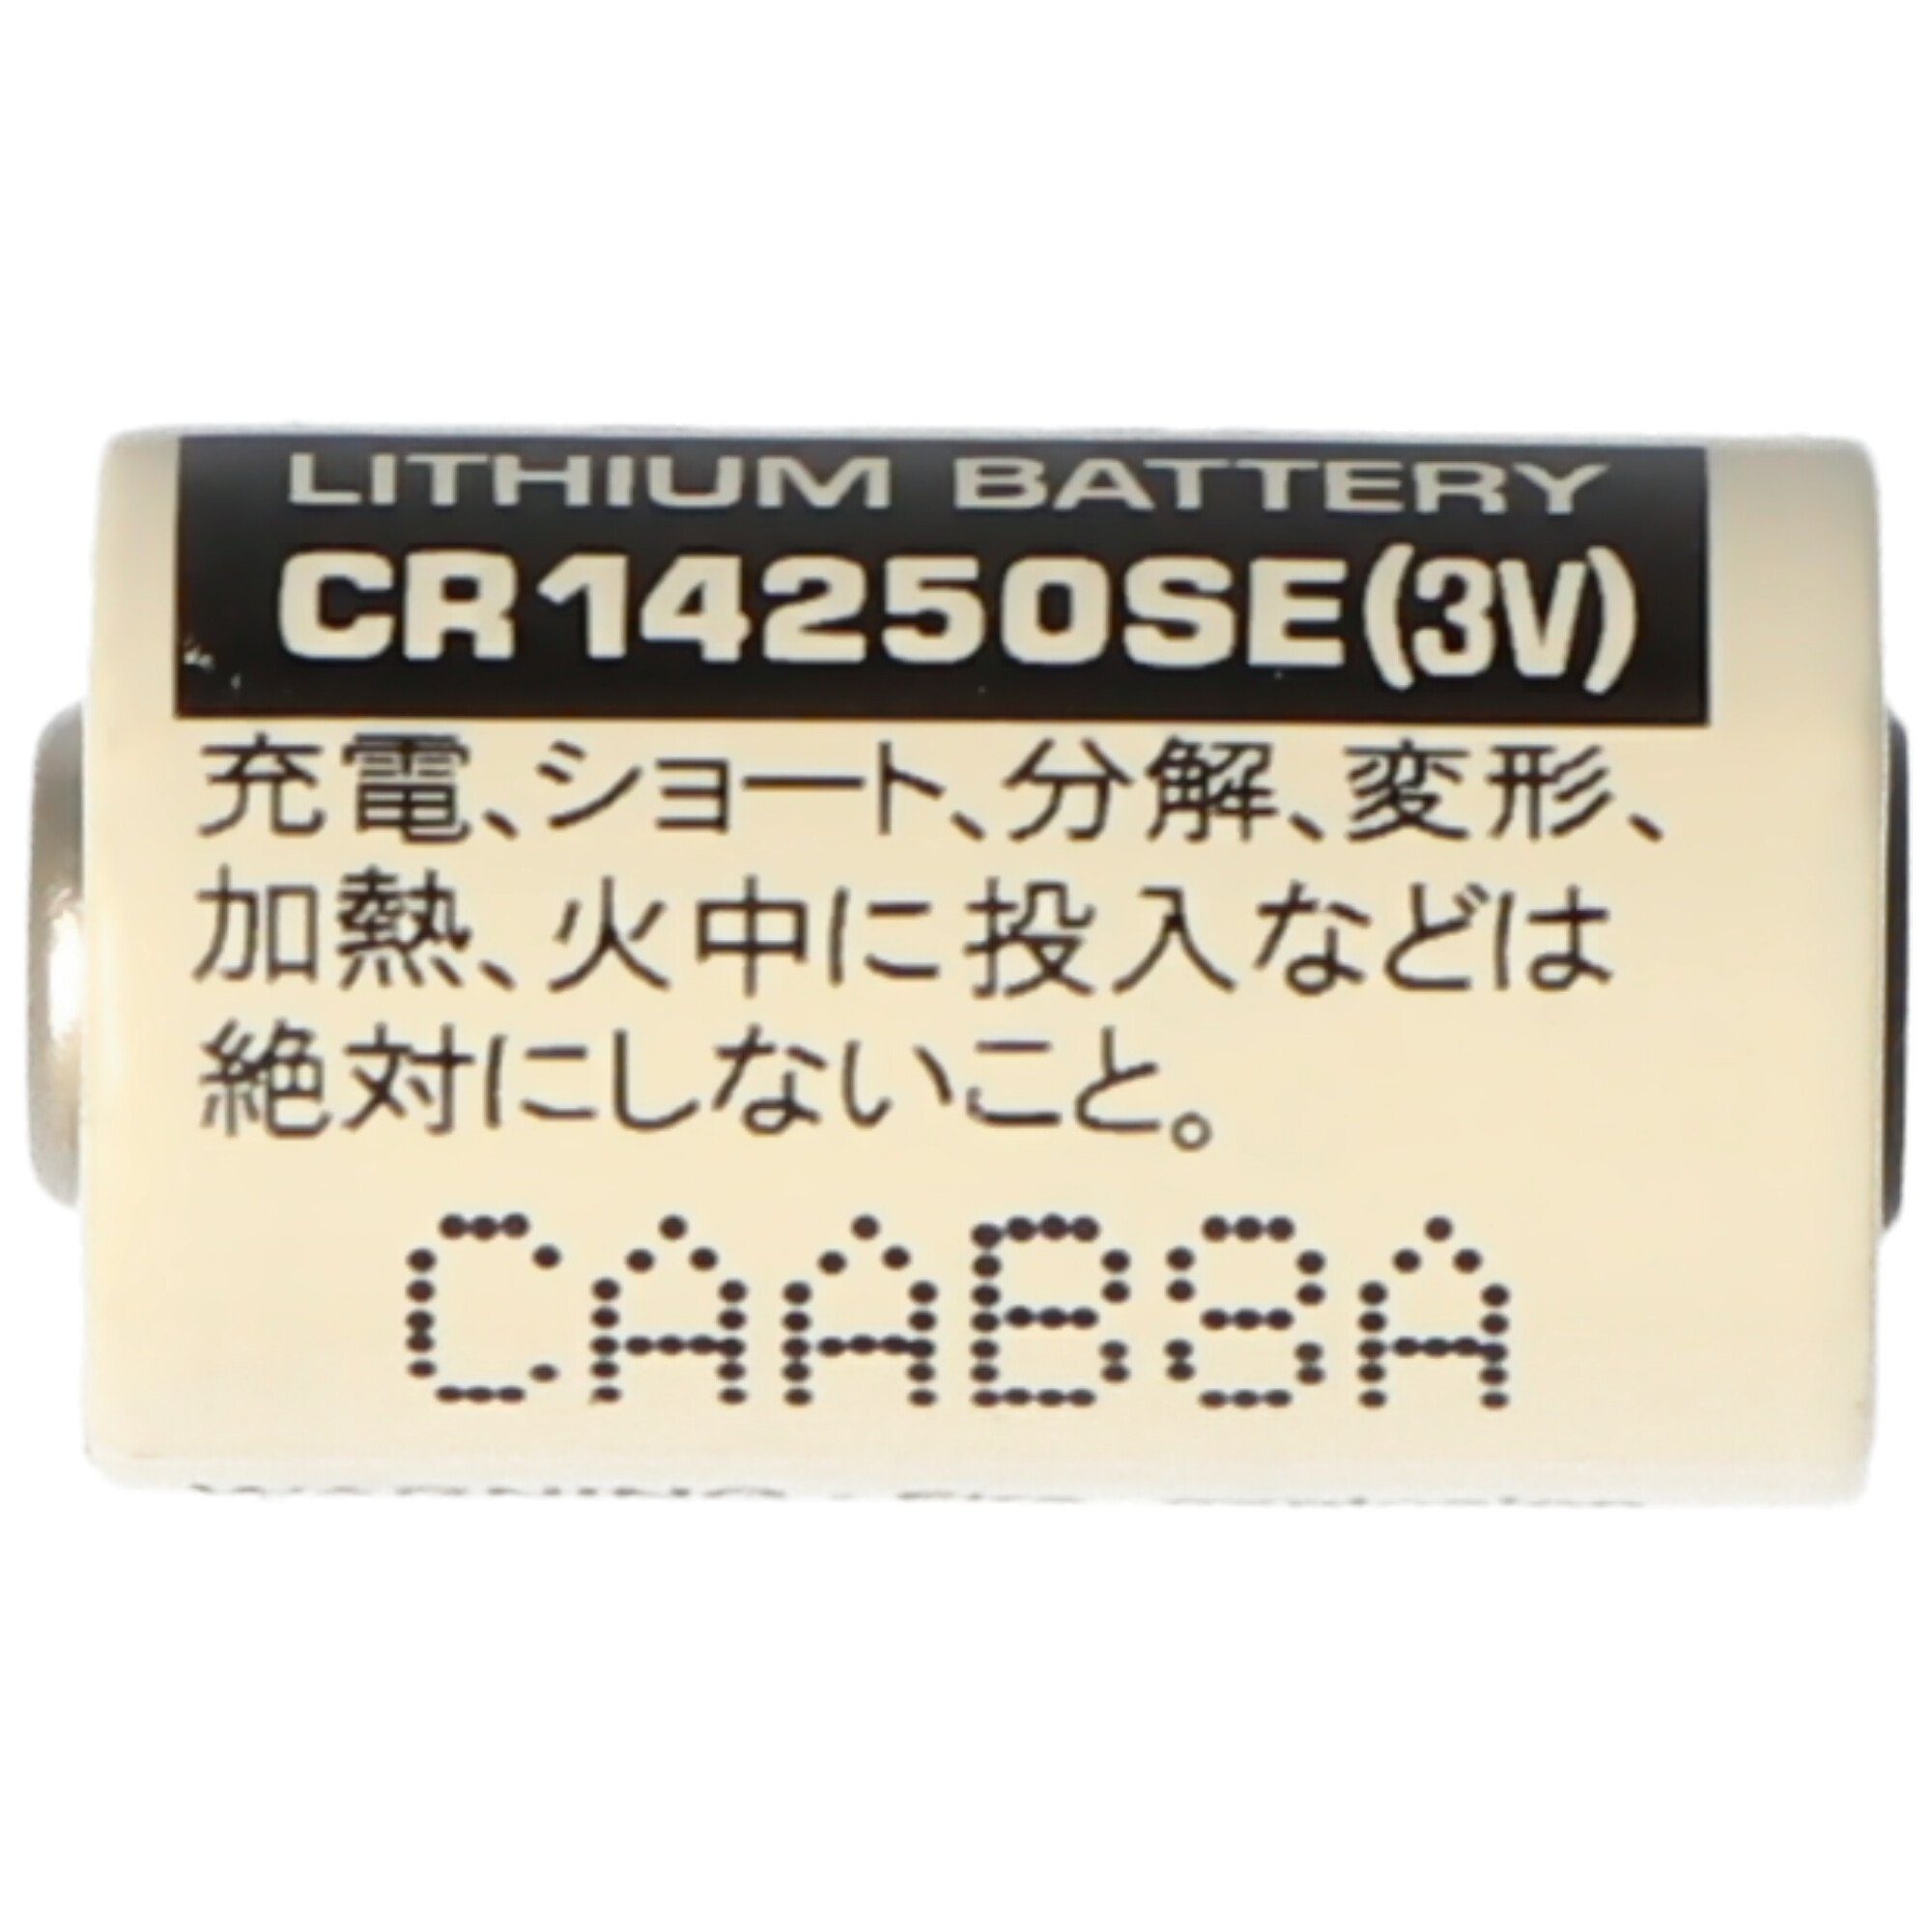 CR14250 V) SE Sanyo Batterie, IEC (3,0 1/2AA, Sanyo Batterie CR14250 CR14250 FDK Lithium